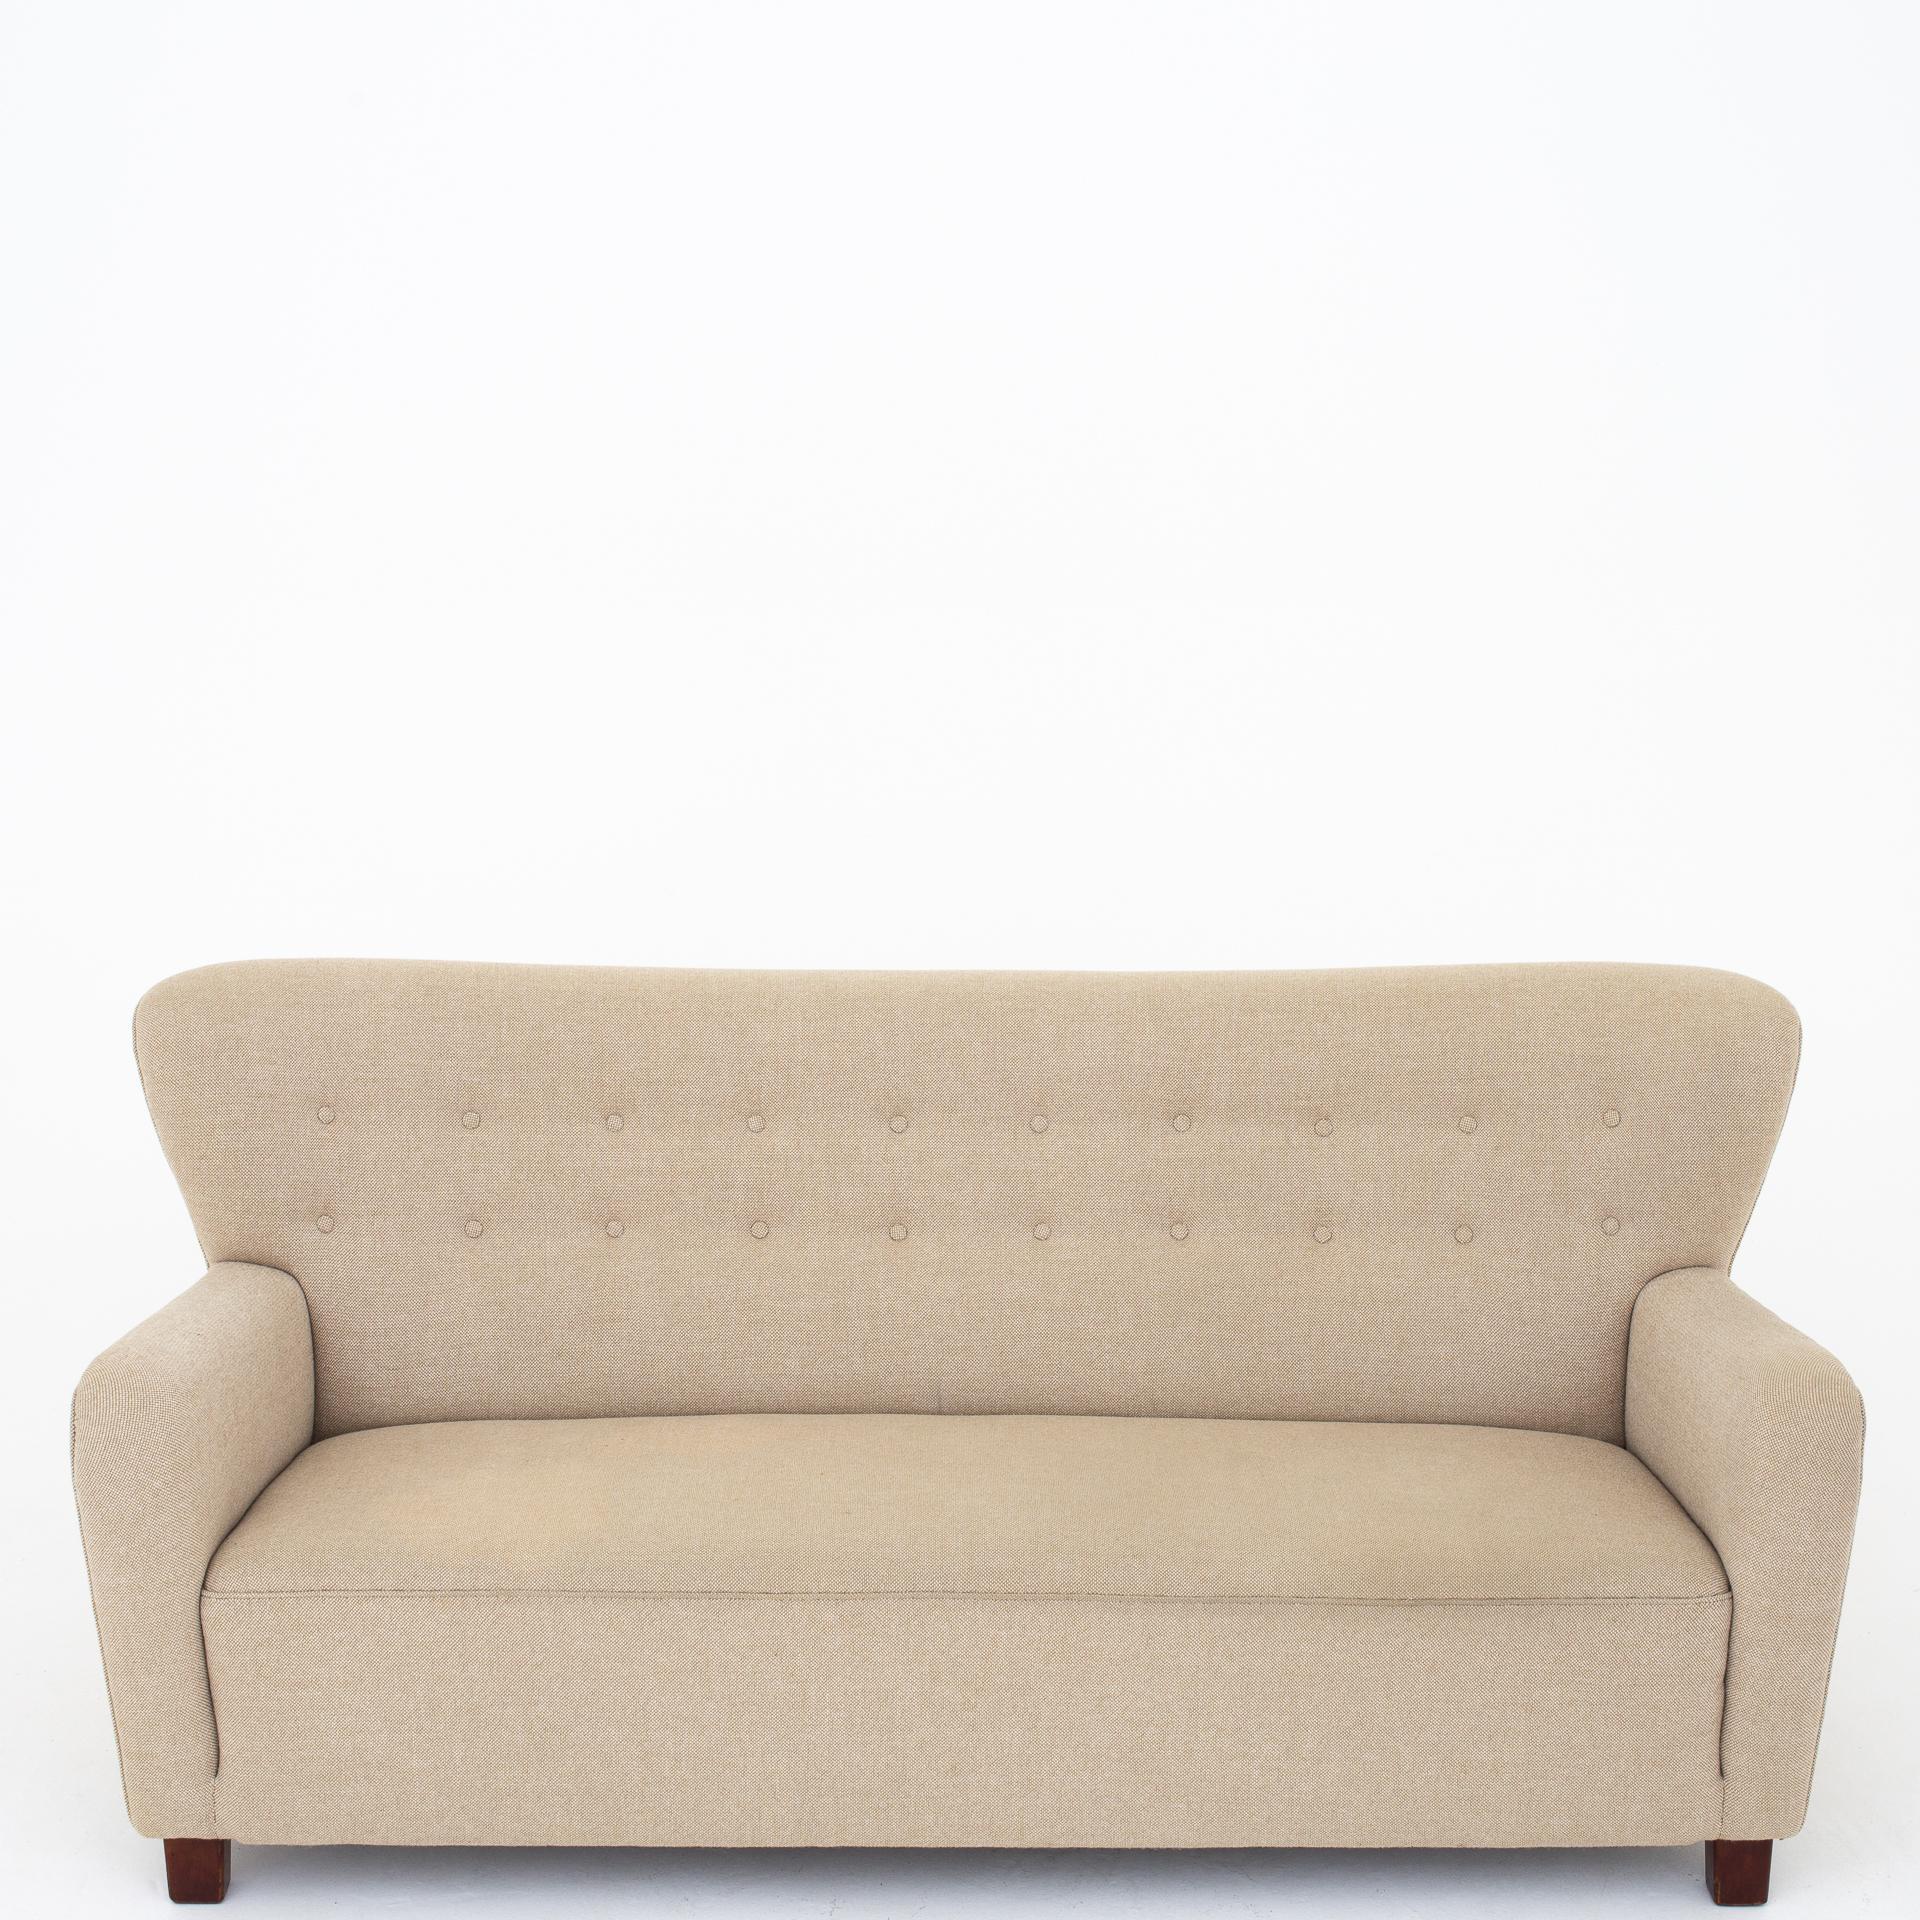 Sofa by Thorald Madsen In Good Condition For Sale In Copenhagen, DK